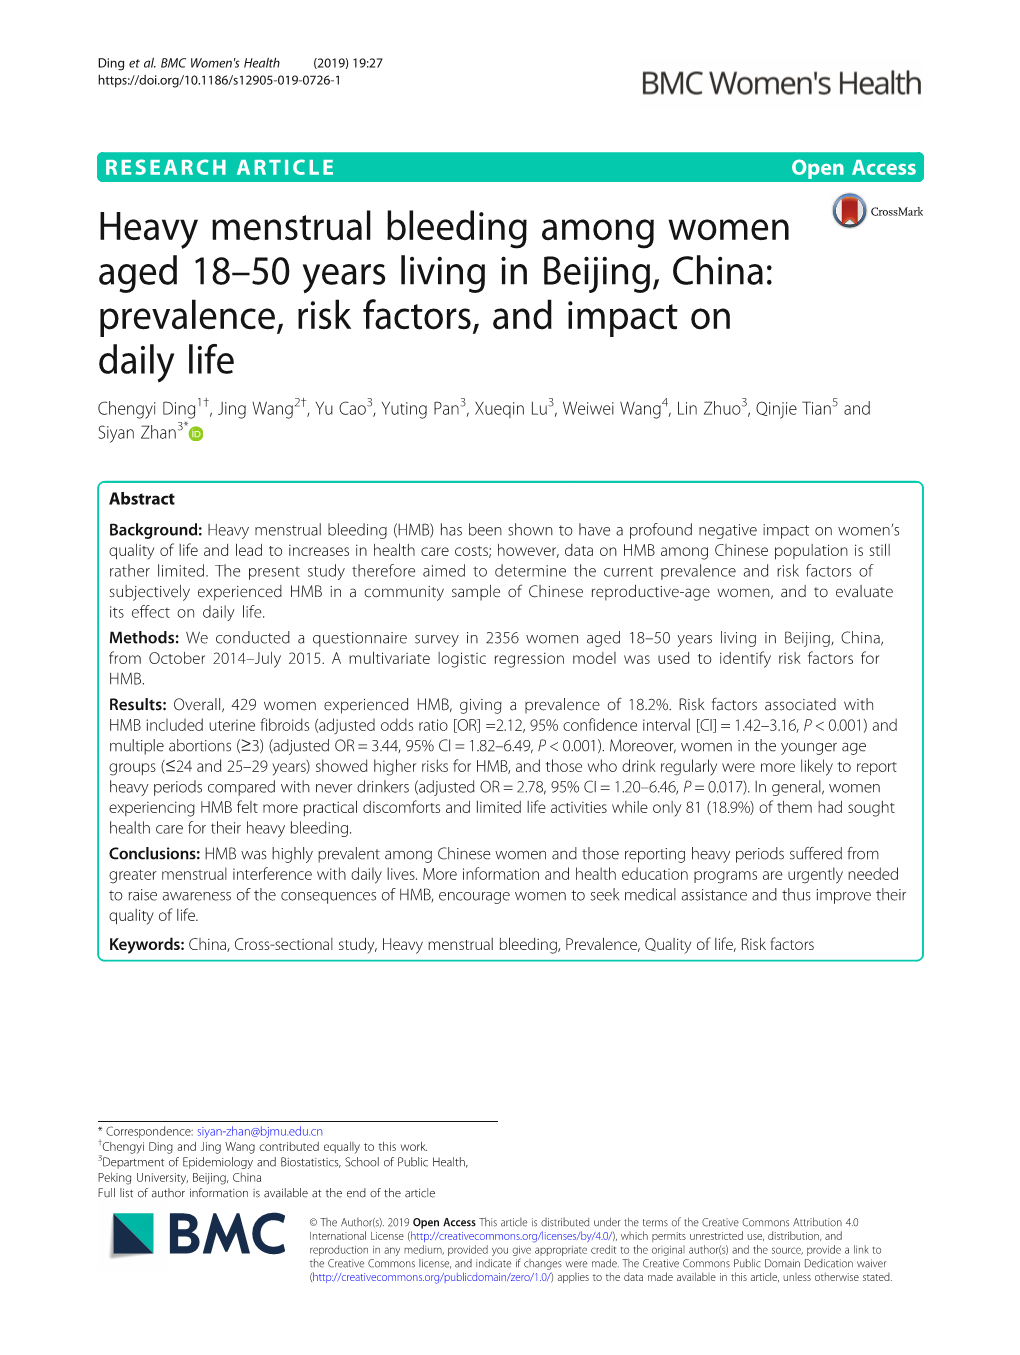 Heavy Menstrual Bleeding Among Women Aged 18–50 Years Living In